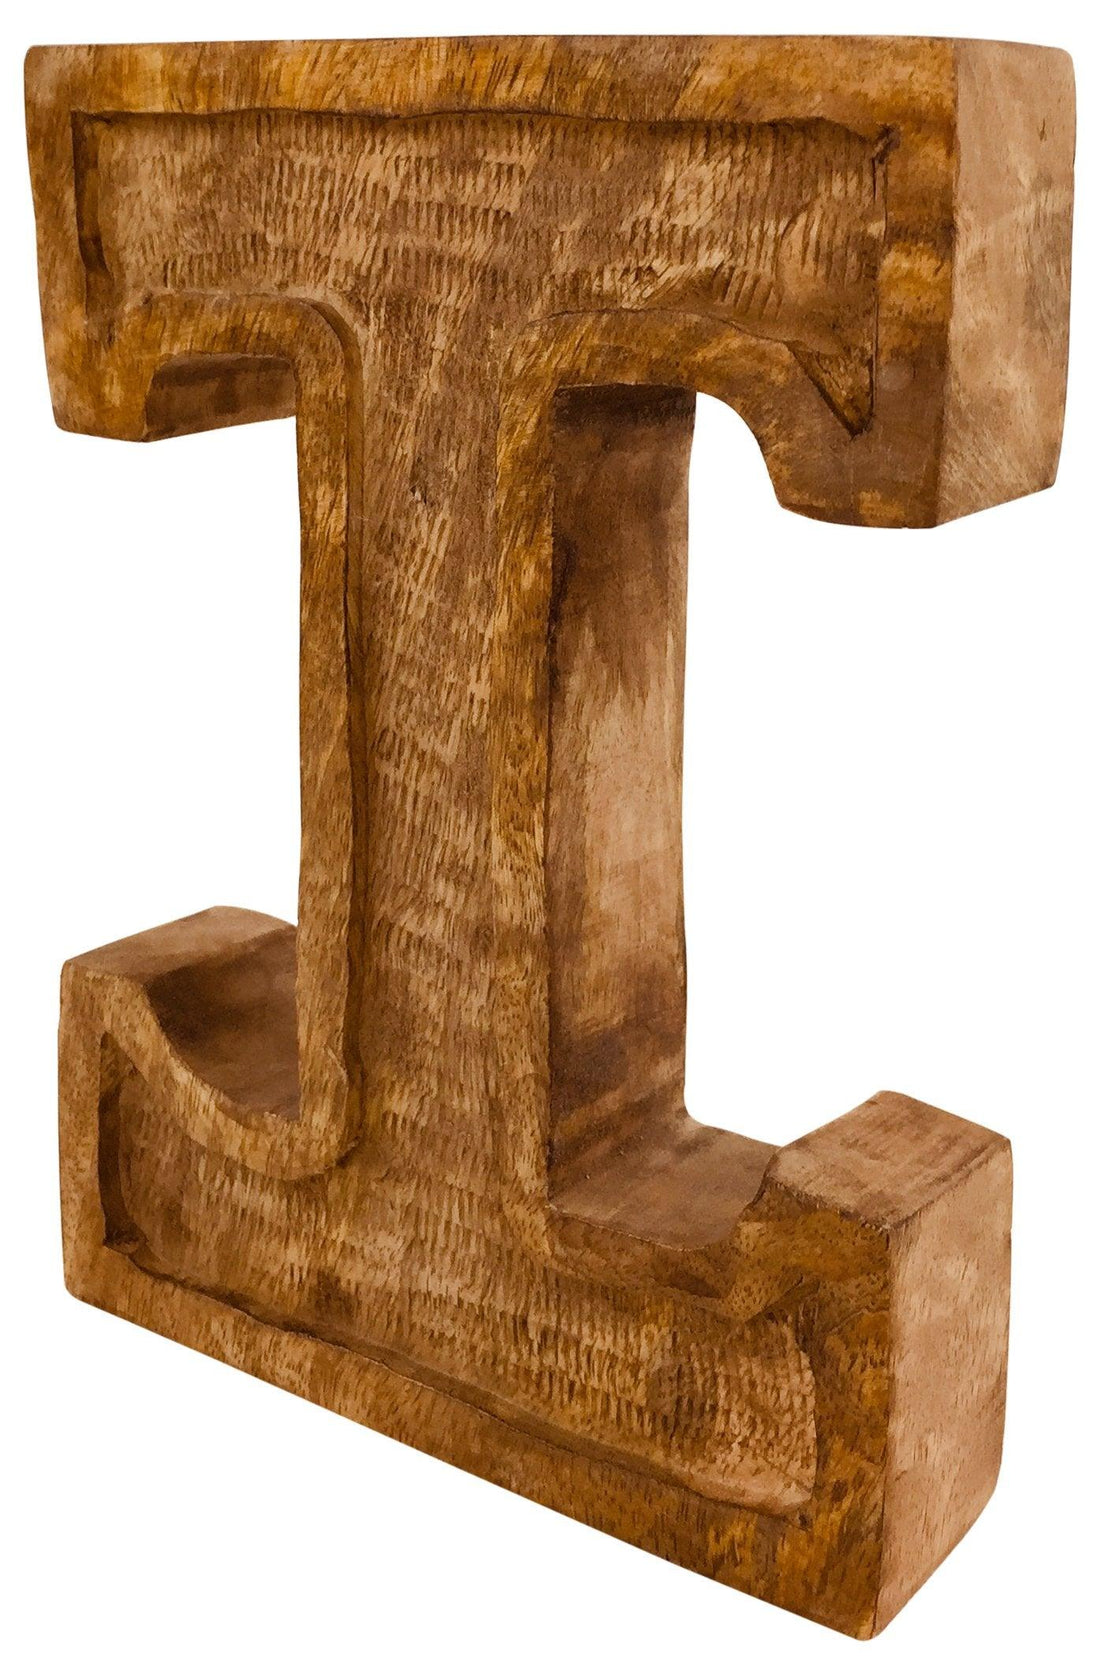 Hand Carved Wooden Embossed Letter I - £18.99 - Single Letters 